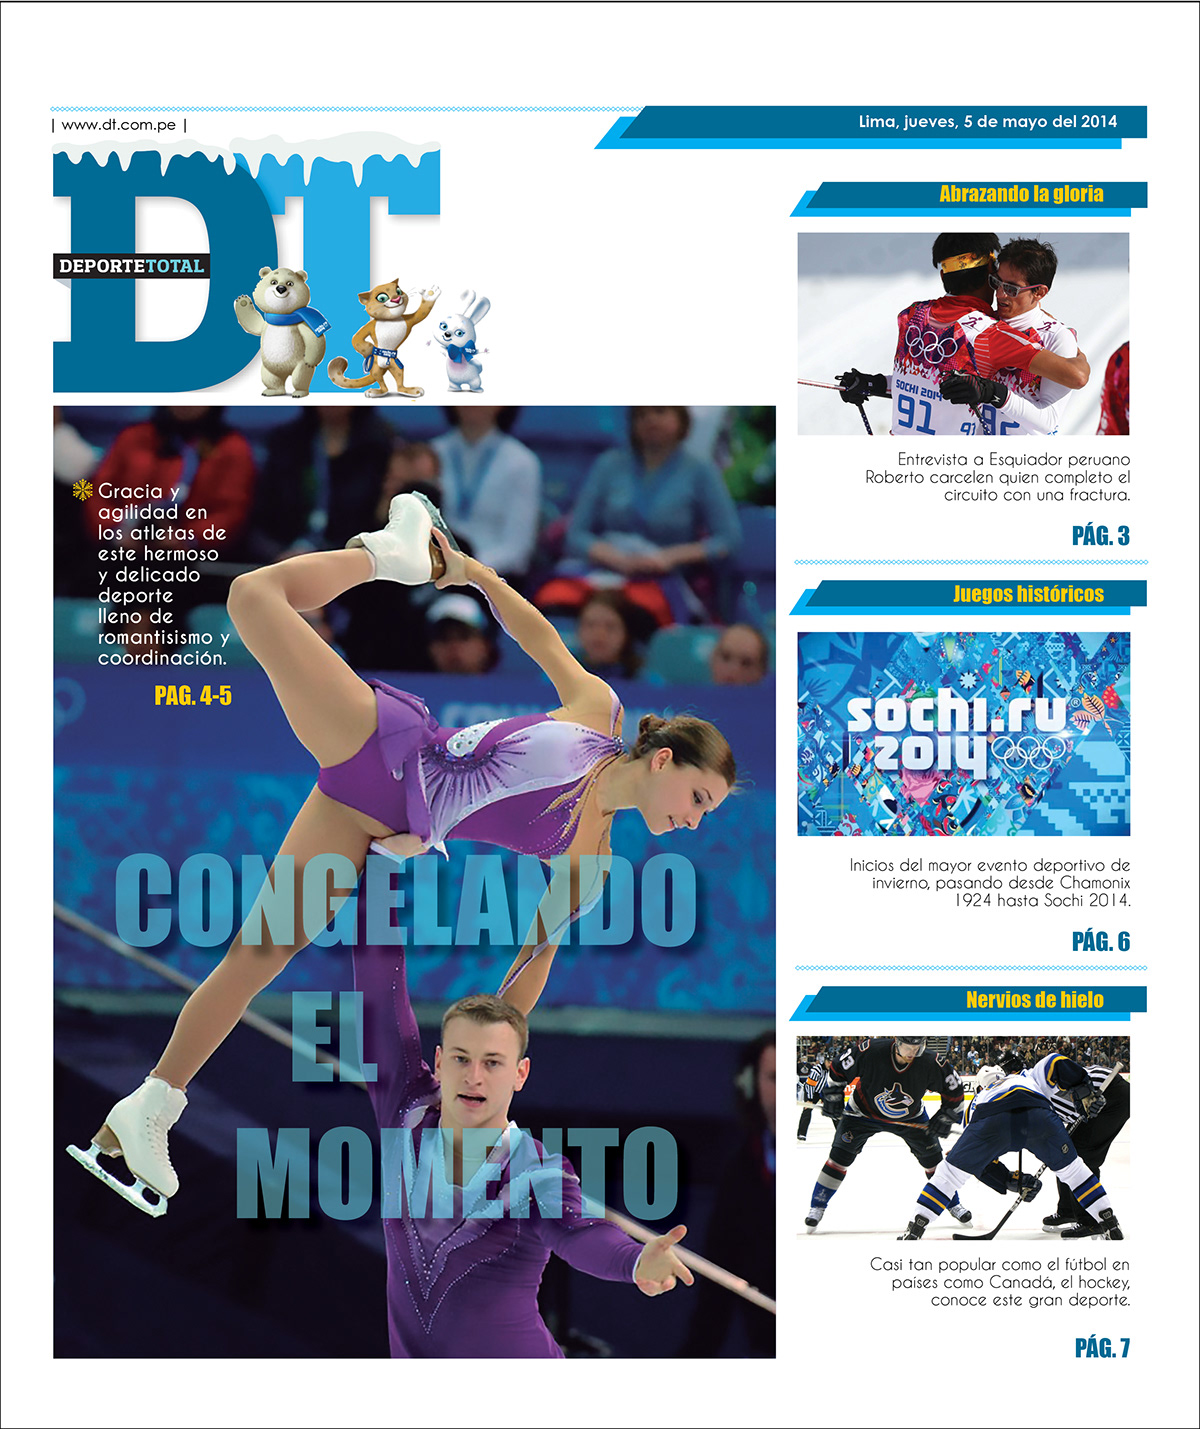 supplement Anthony sports El Comercio newspaper editorial sochi 2014